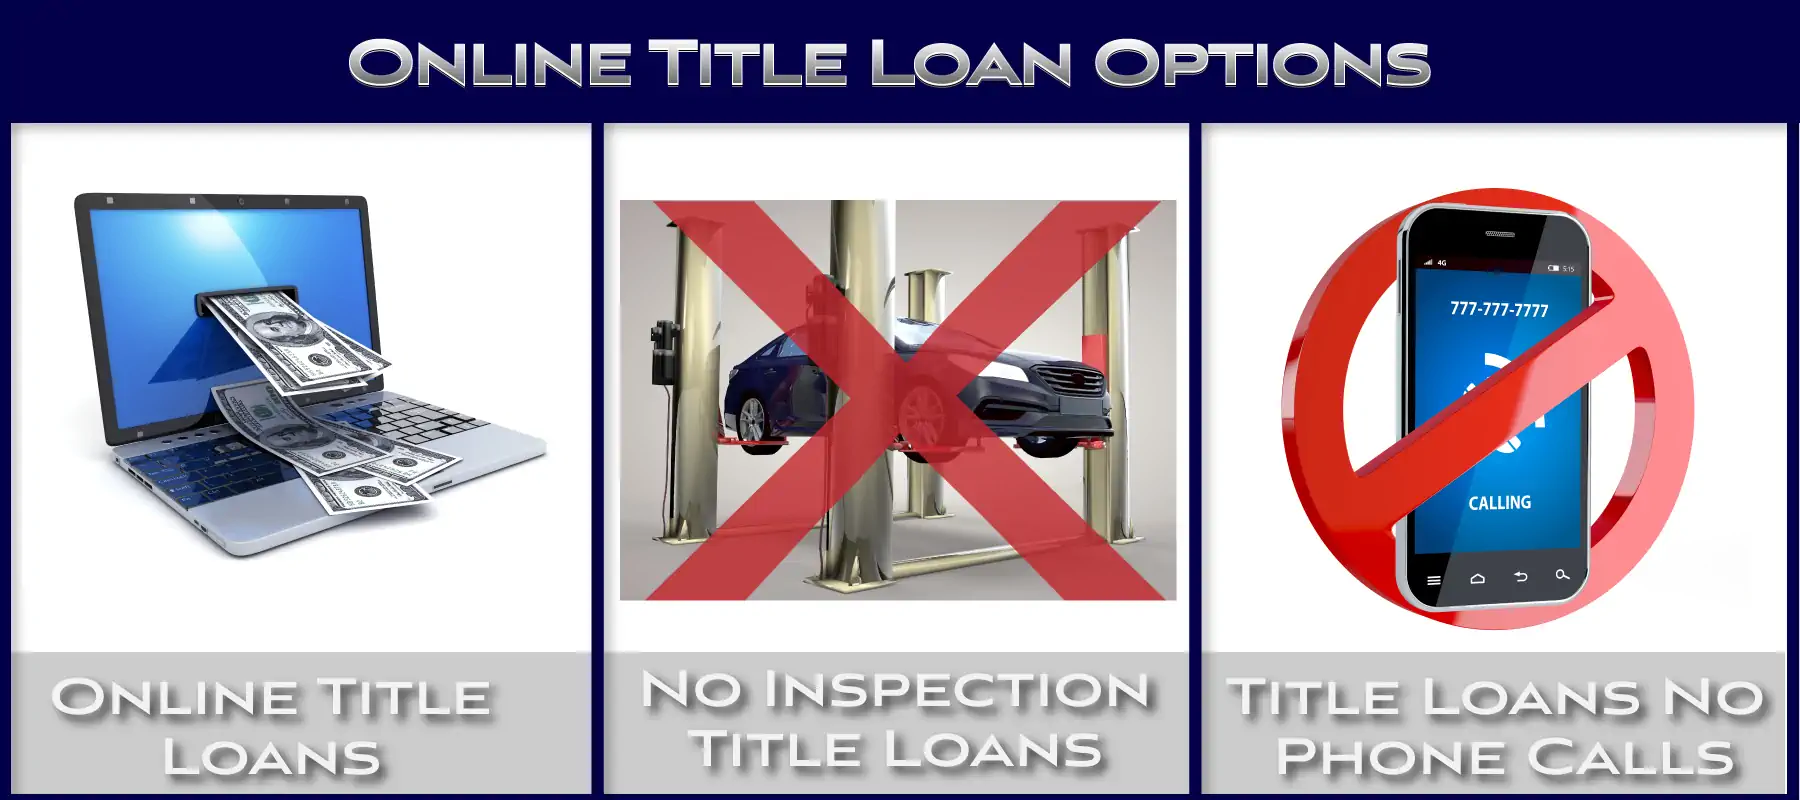 Online Car Title Loan Options - 1. Online title loans, 2. no inspection title loans, 3. No phone call title loans. 